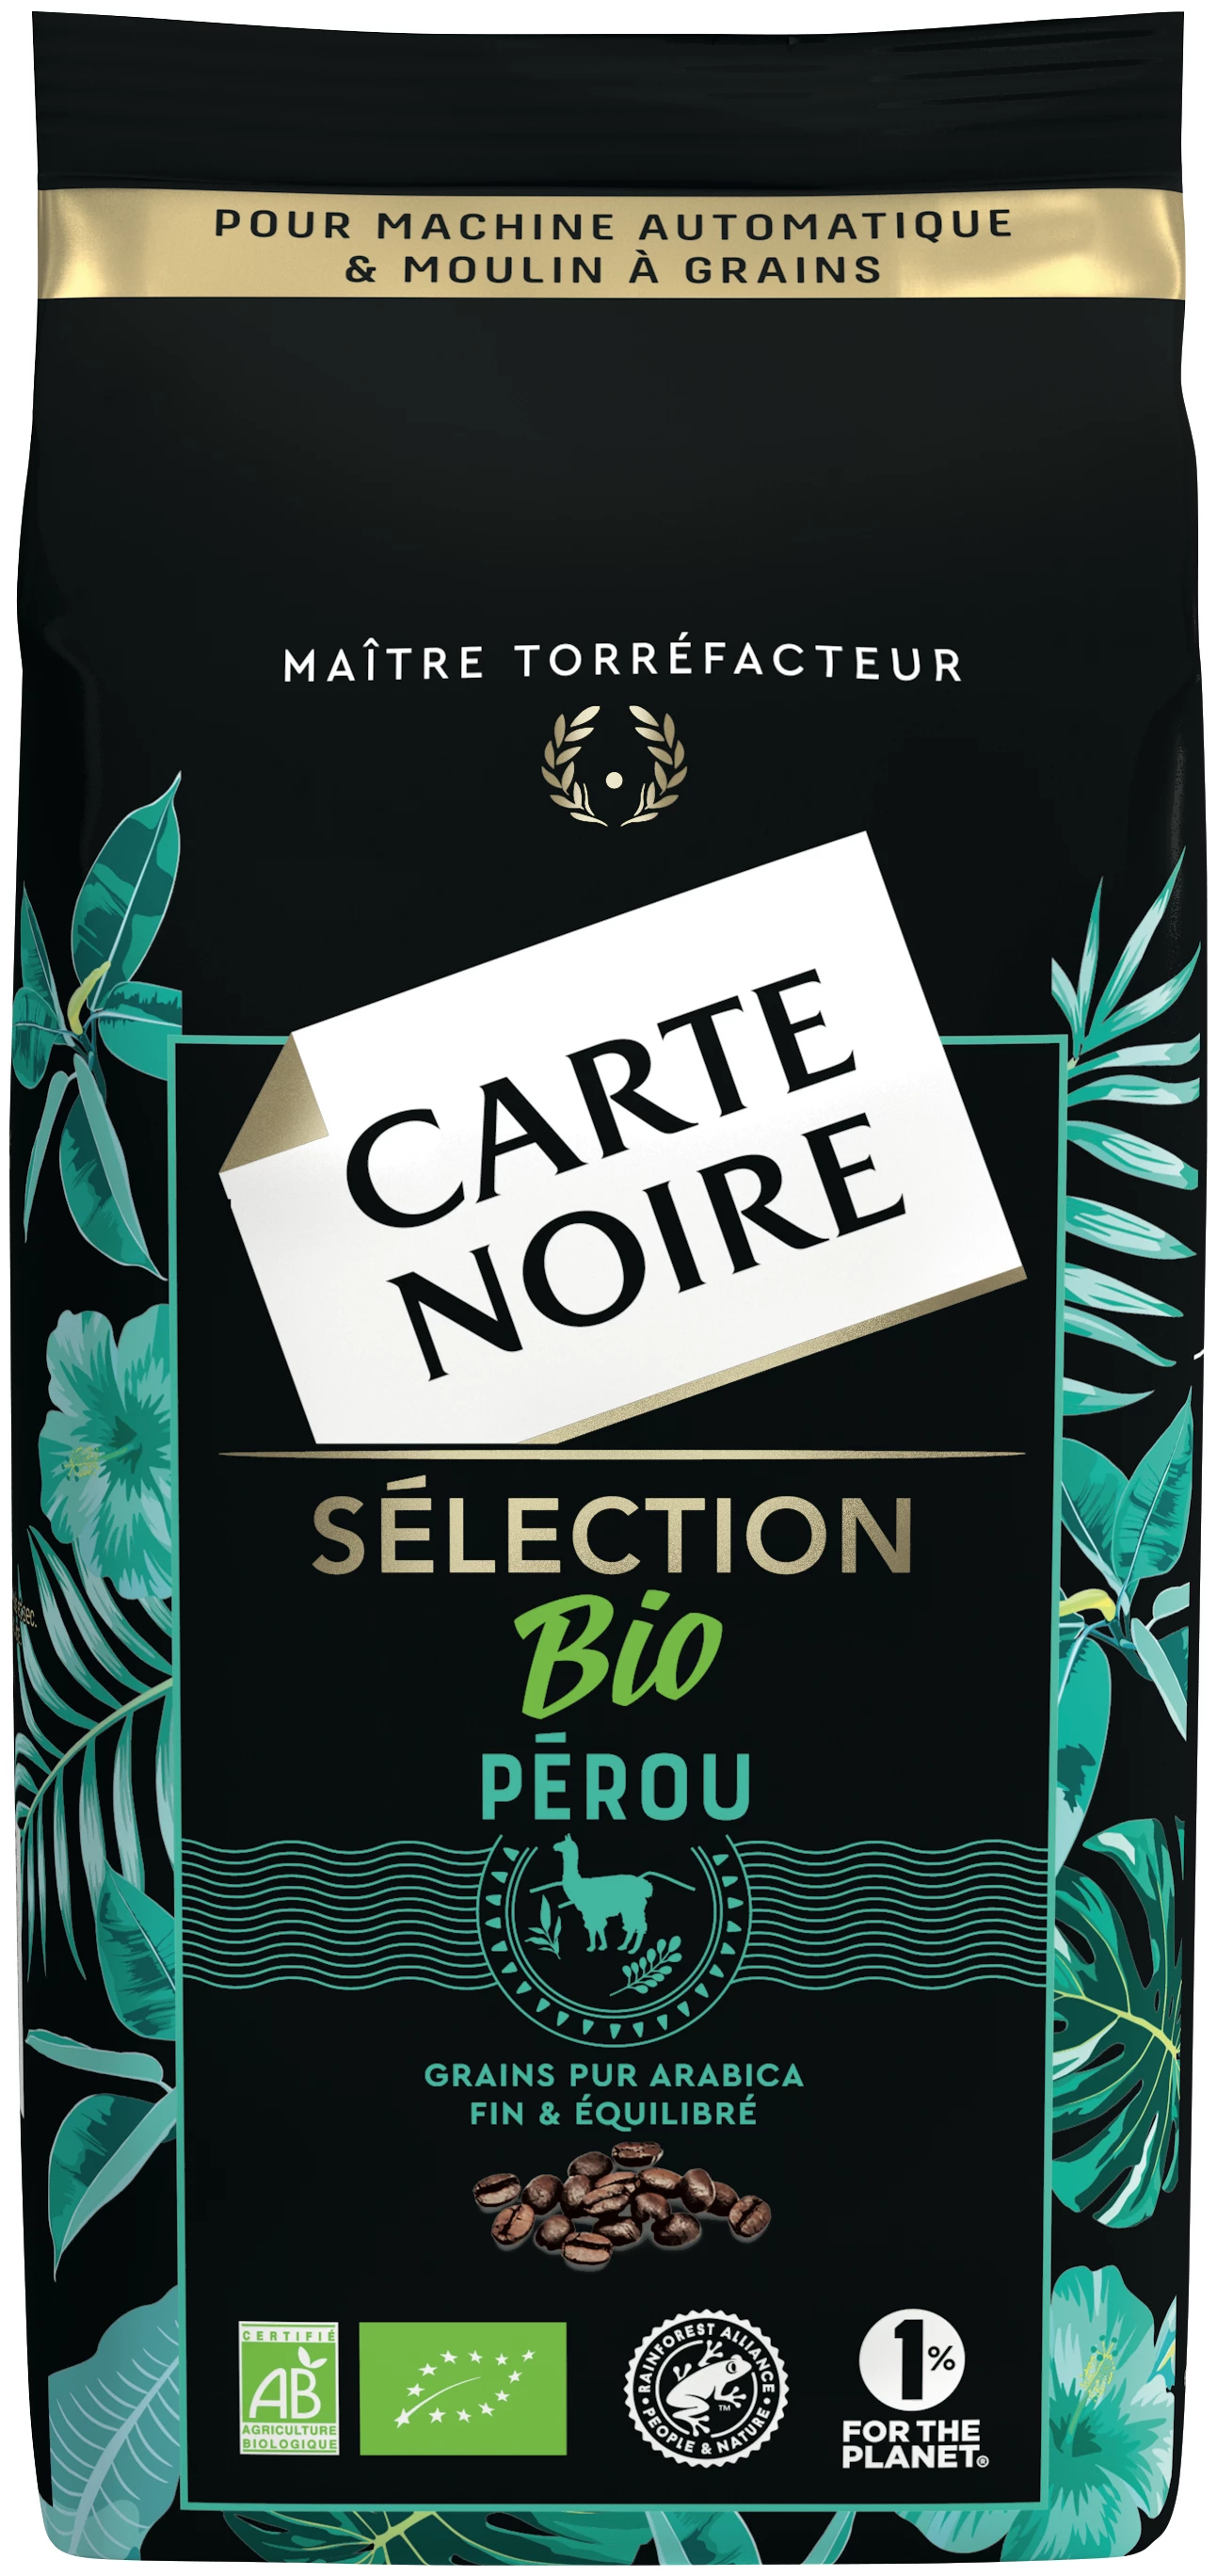 Organic Peru grain coffee 500g - CARTE NOIRE wholesaler